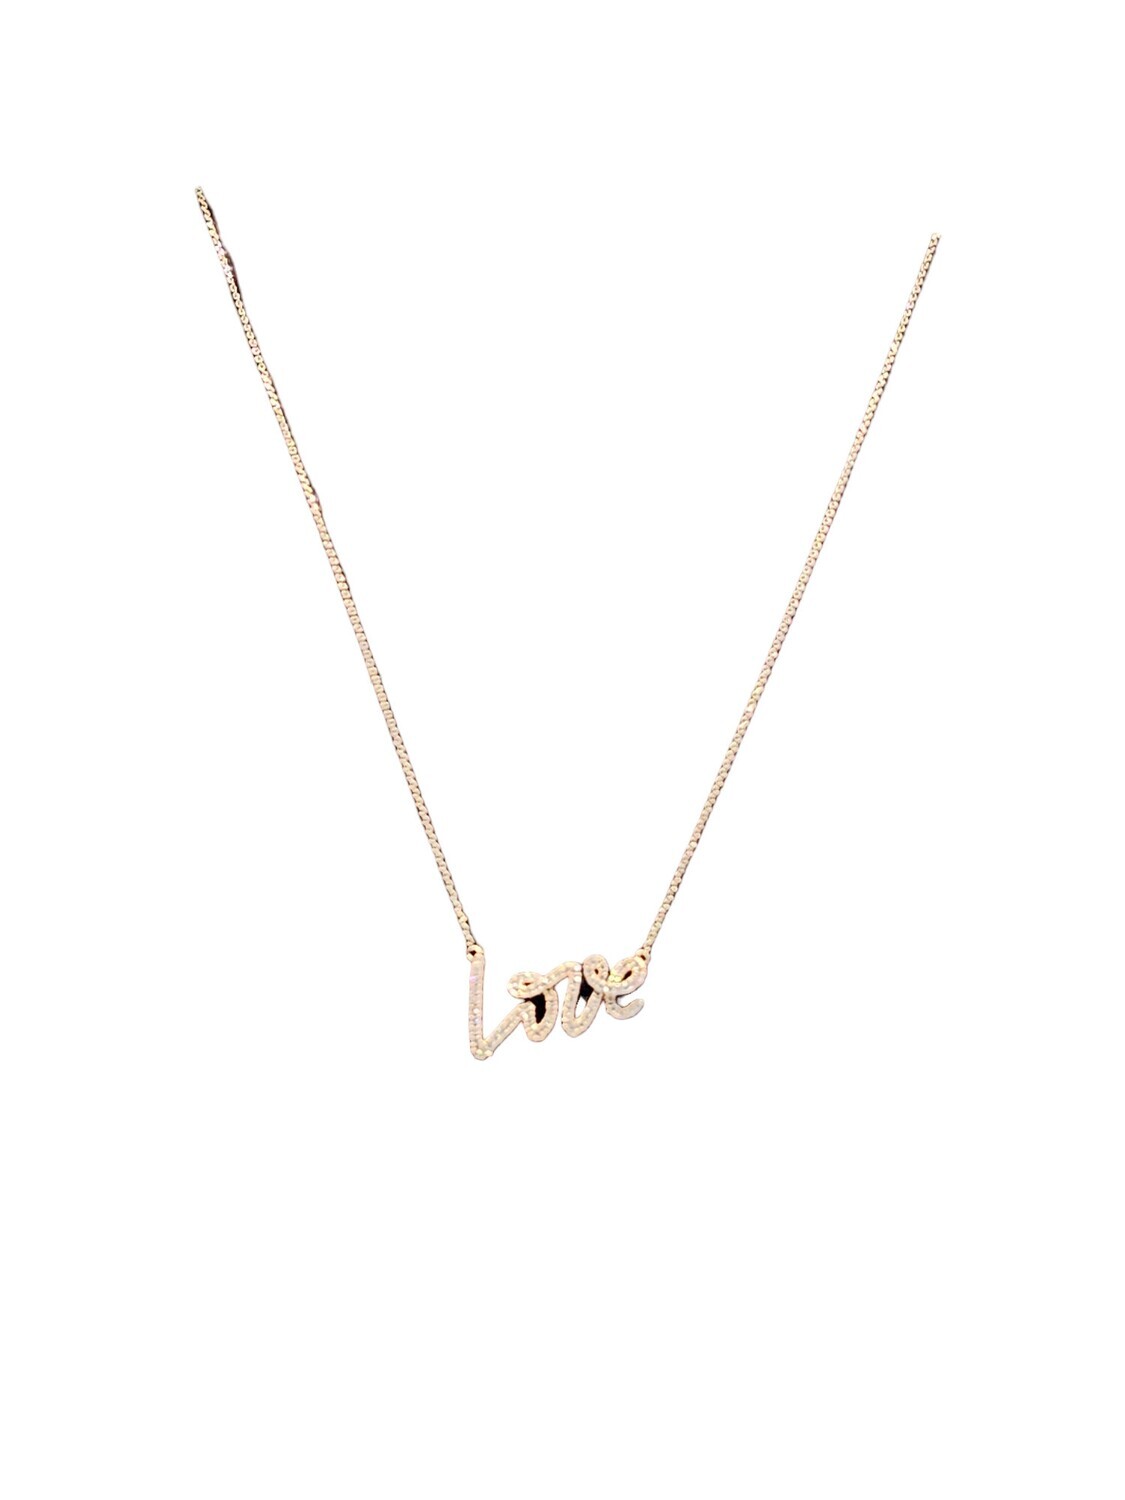 LOVE Natural Diamond 14kt Rose Gold Necklace - 18 Long